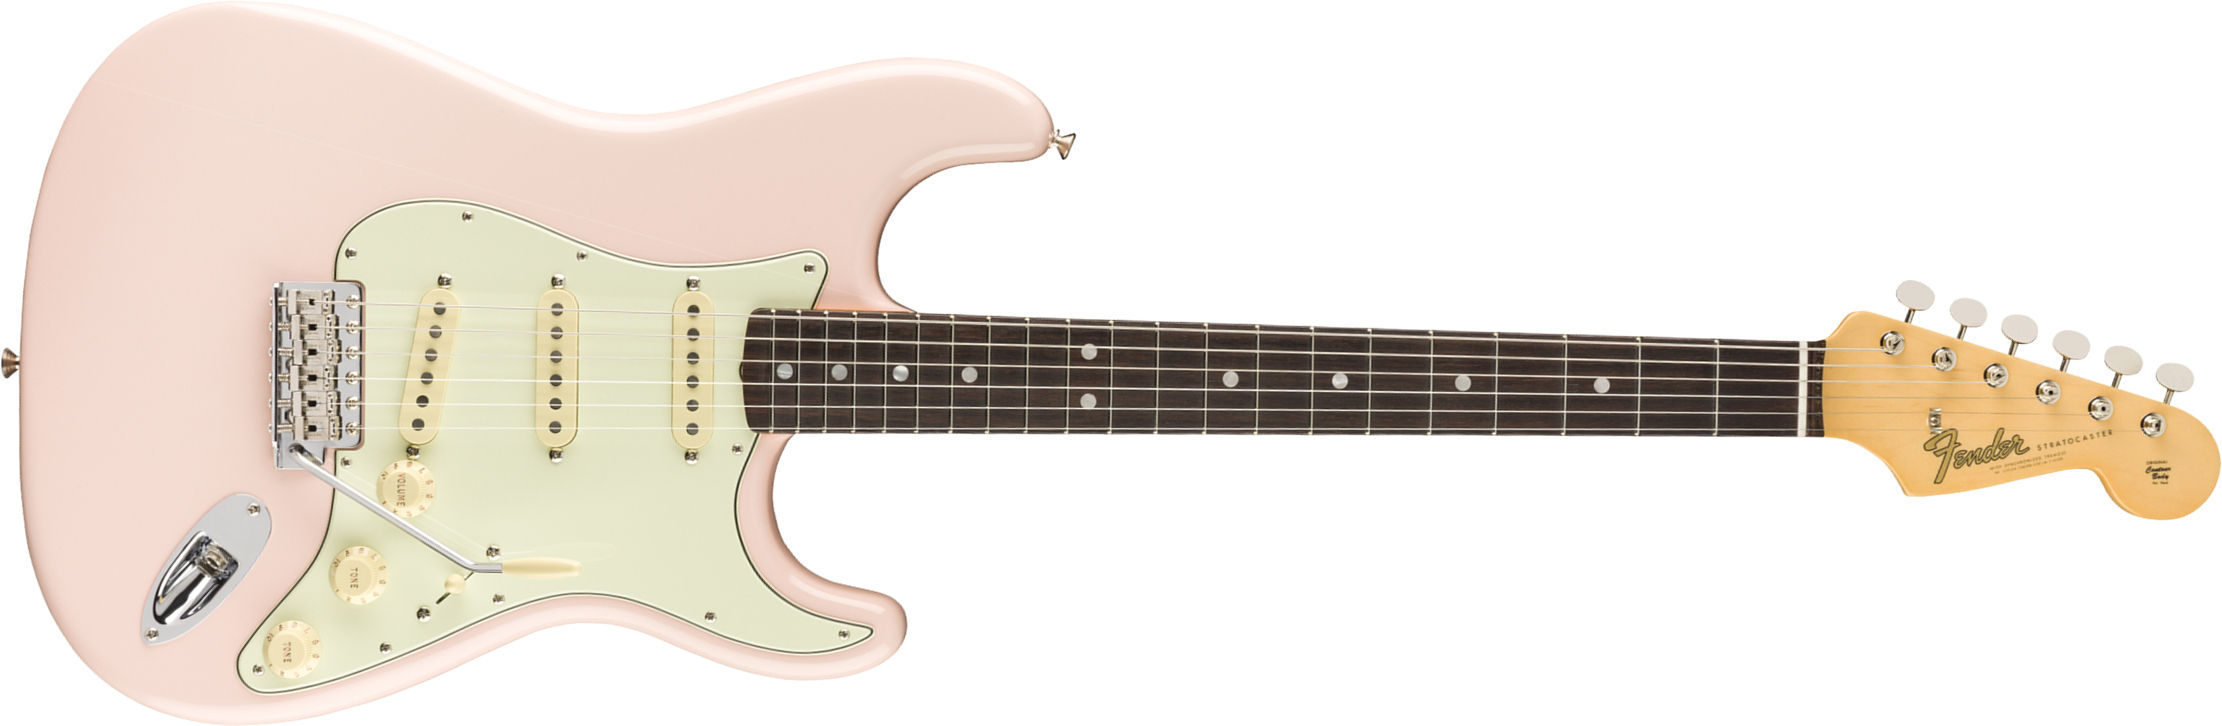 Fender Strat '60s American Original Usa Sss Rw - Shell Pink - Guitare Électrique Forme Str - Main picture